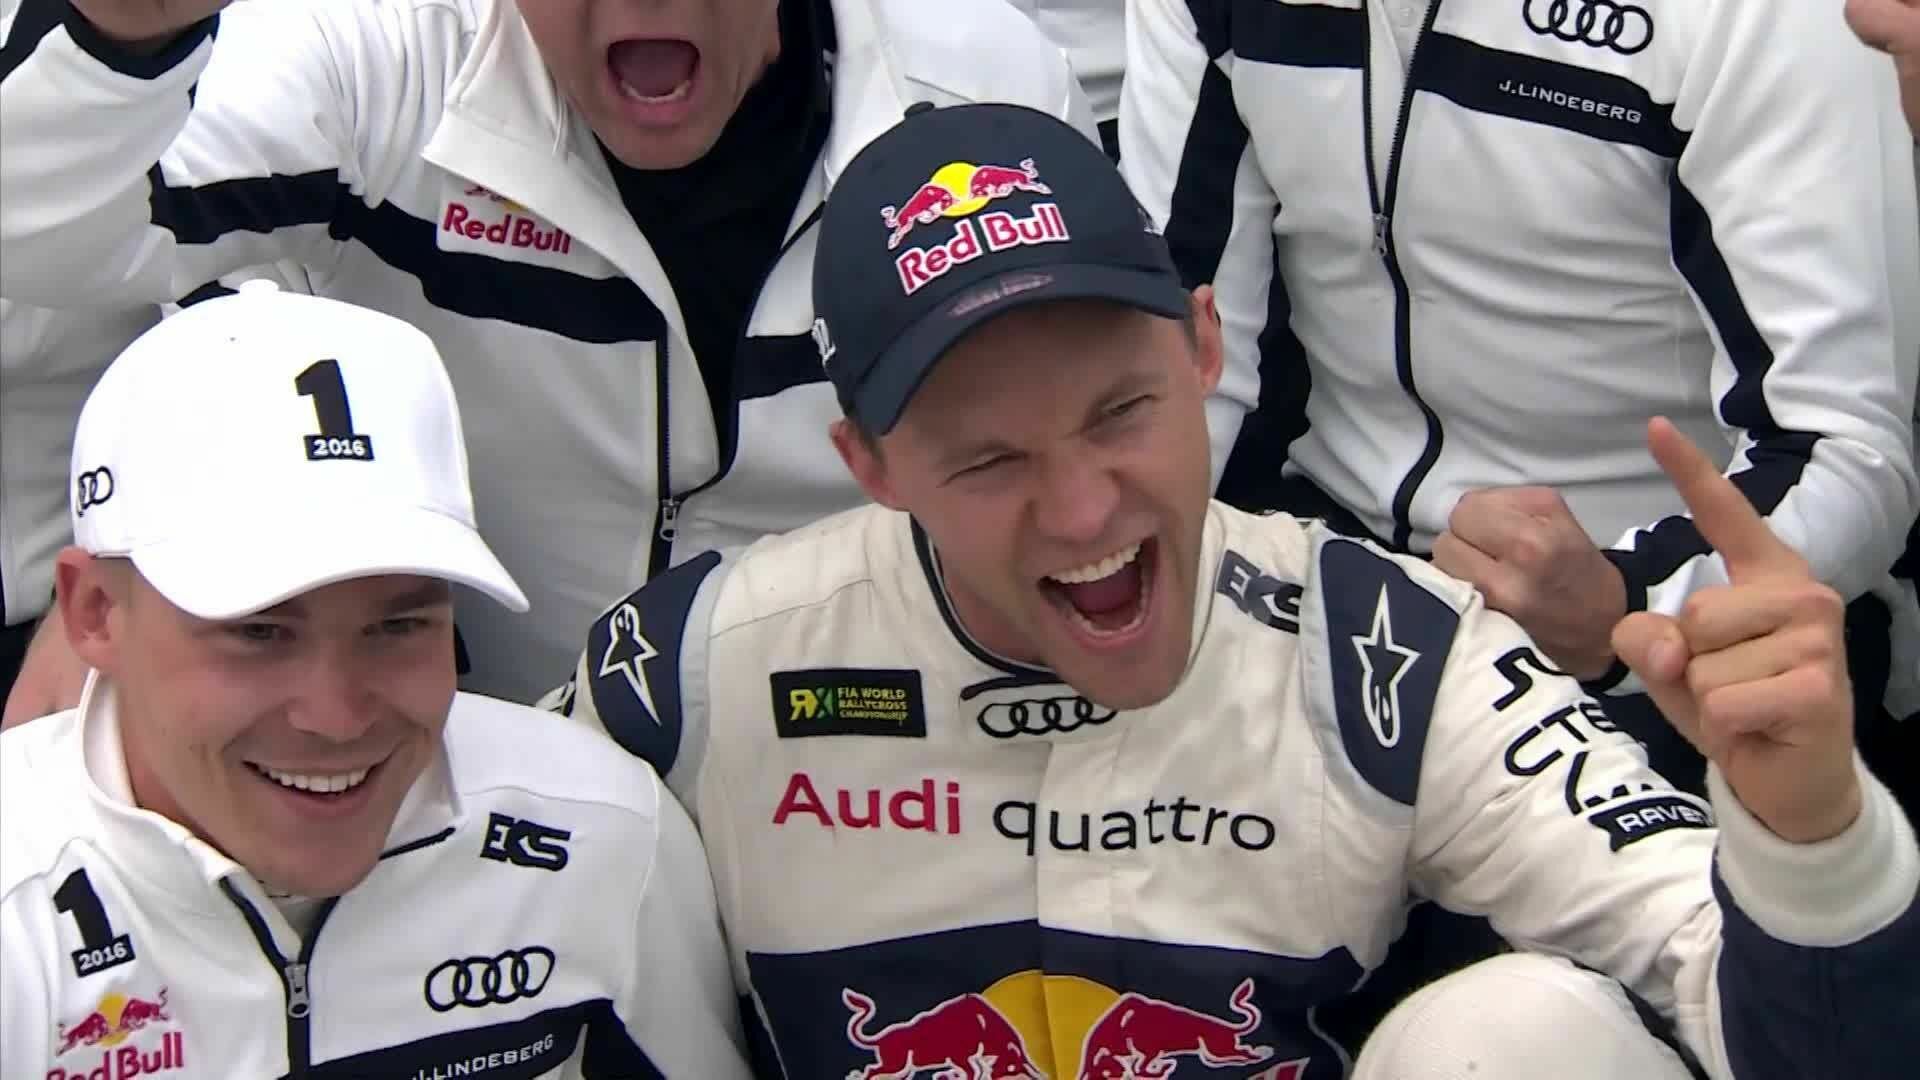 FIA World Rallycross Championship: Mattias Ekström celebrates early title win